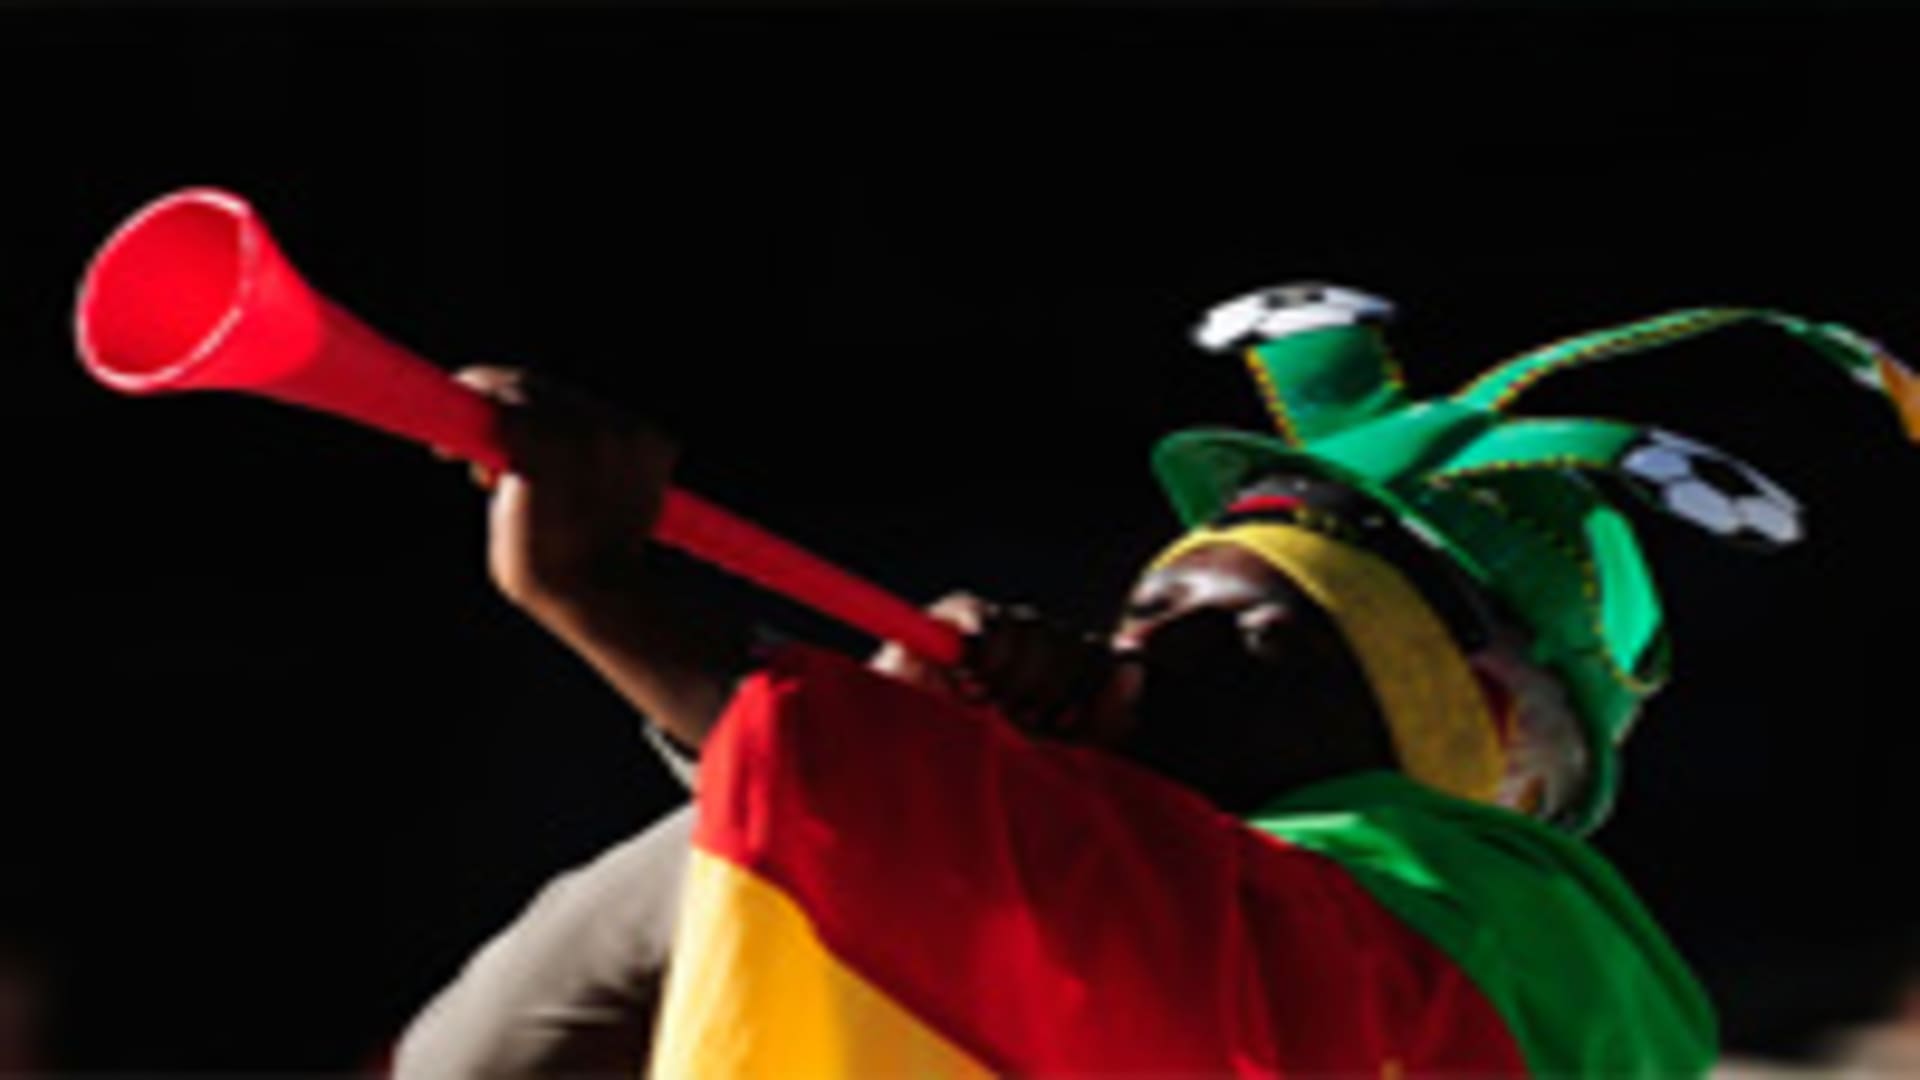 https://image.cnbcfm.com/api/v1/image/37687495-world_cup_vuvuzela_200.jpg?v=1354732729&w=1920&h=1080